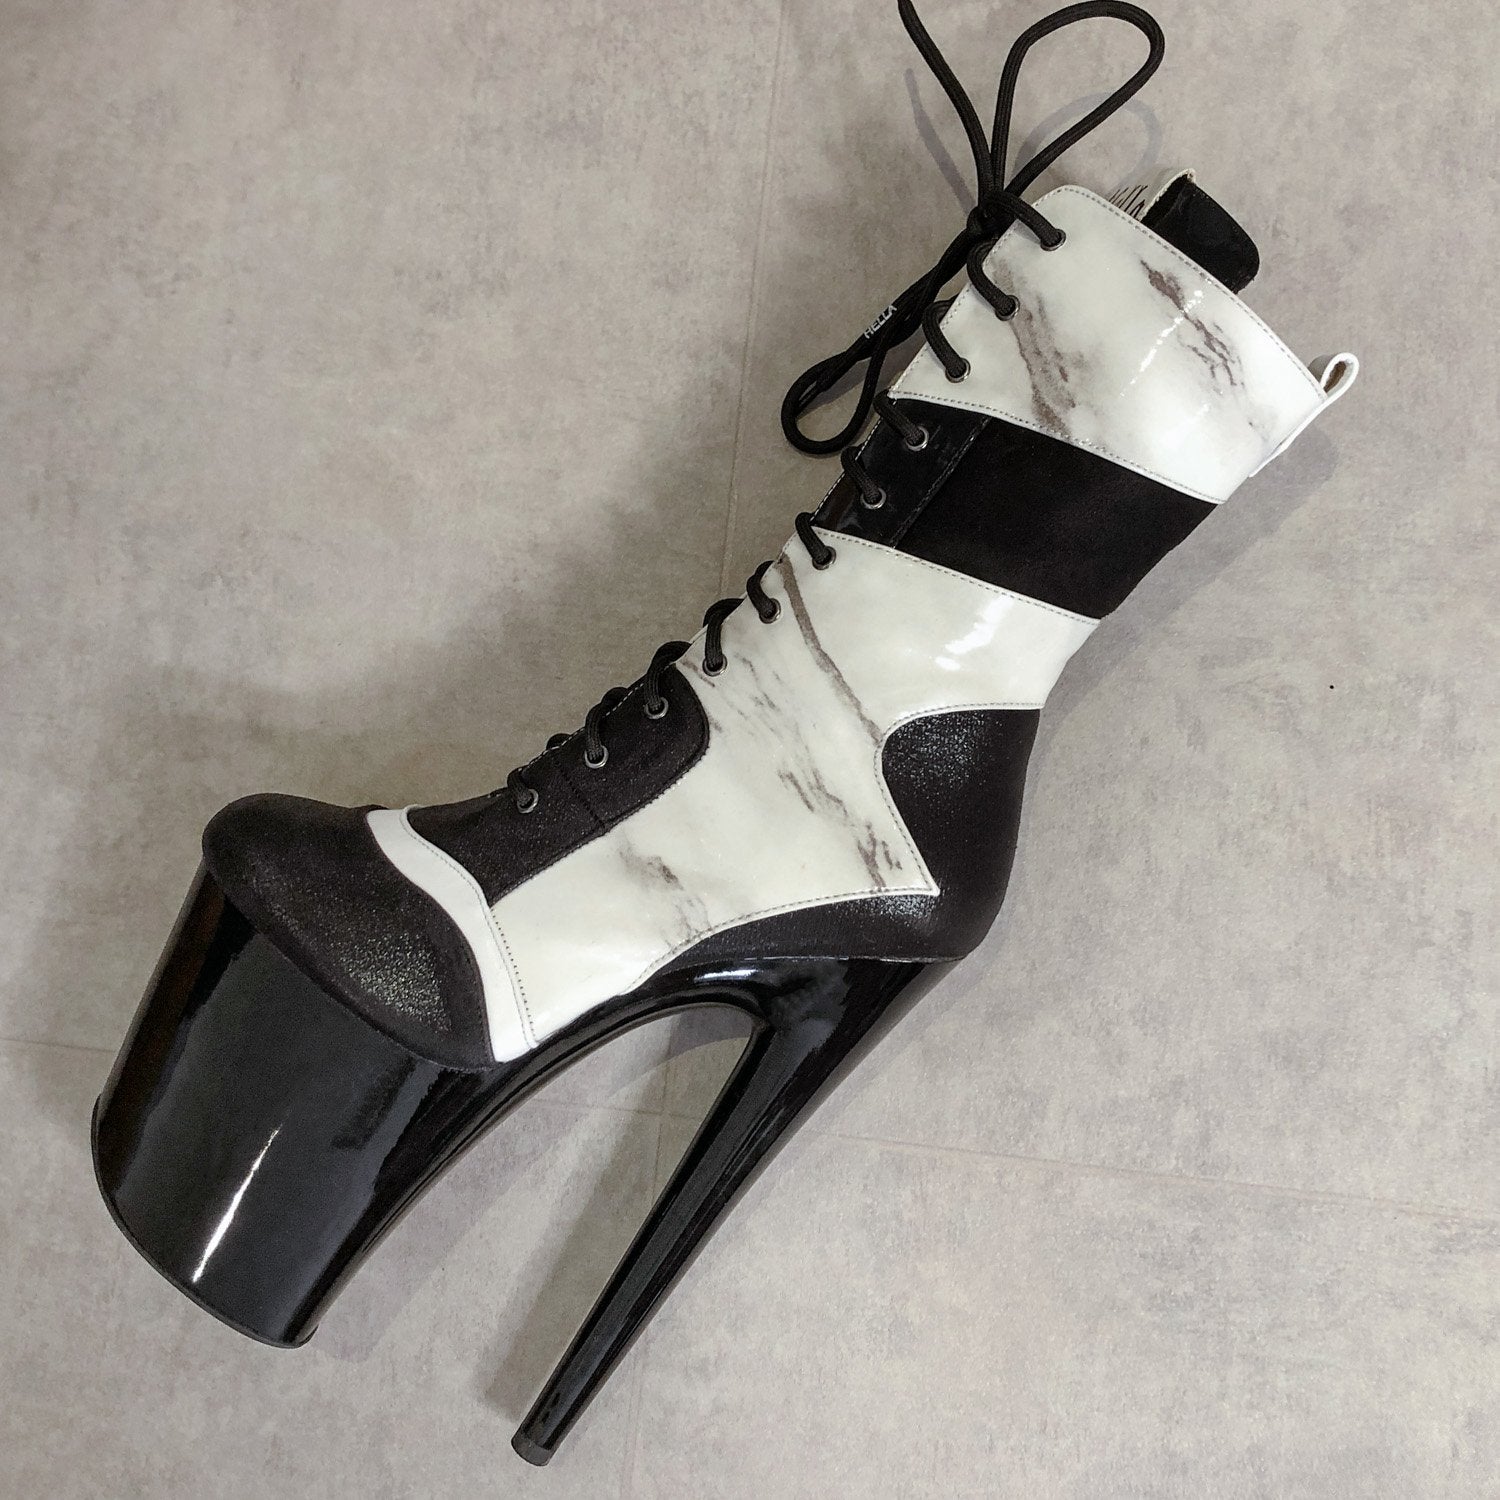 Empire Kicks Sneaker White Marble - 8 INCH, stripper shoe, stripper heel, pole heel, not a pleaser, platform, dancer, pole dance, floor work